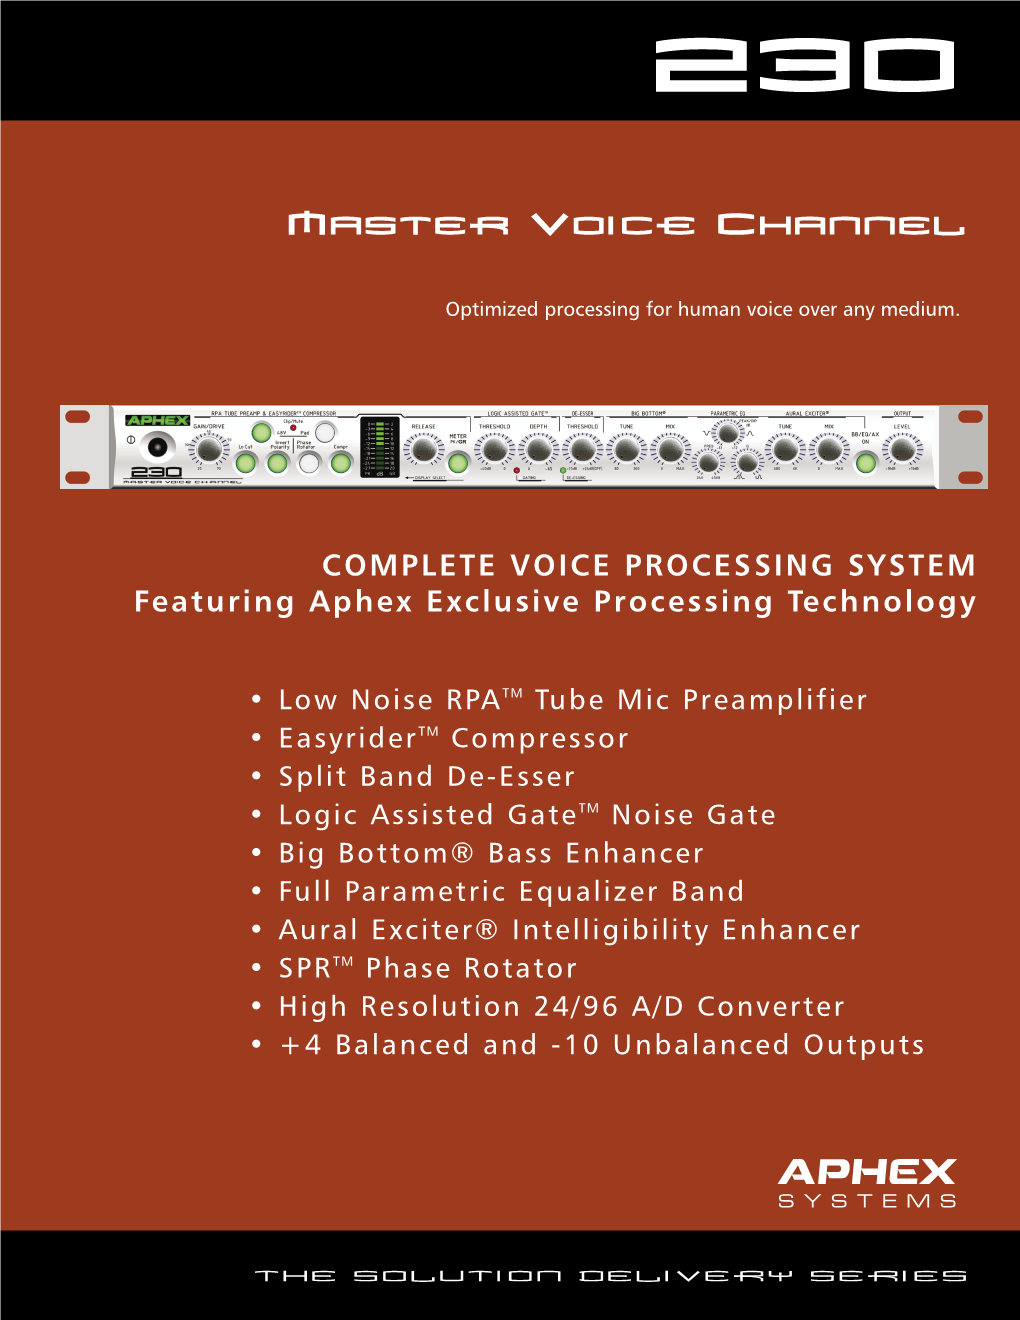 Aphex Systems Ltd